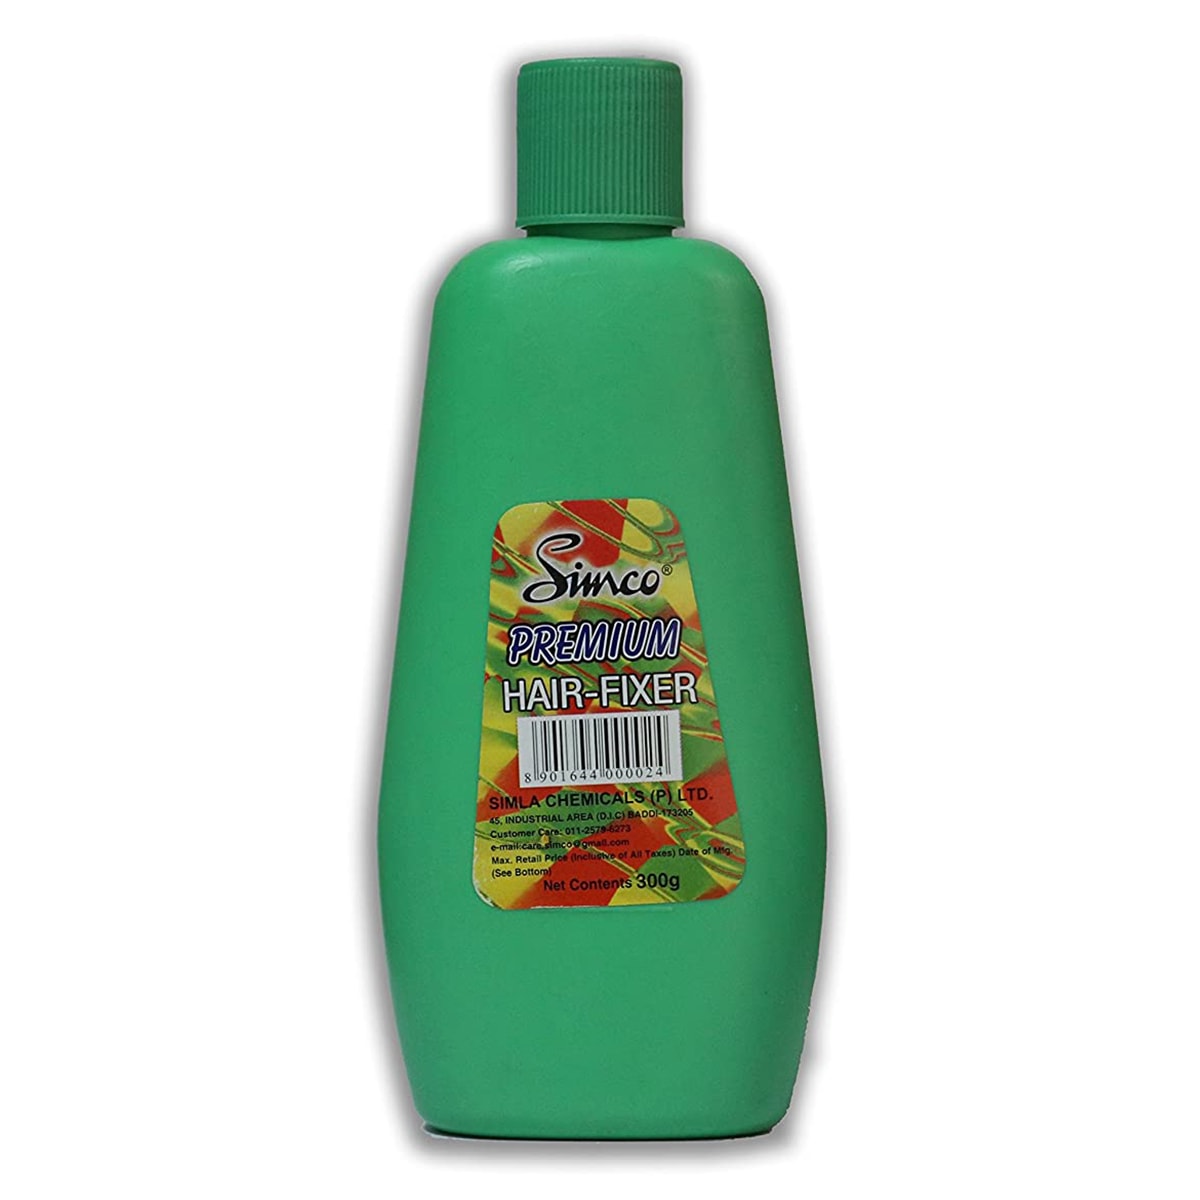 Buy Simco Premium Hair Fixer (Green Bottle) - 300 gm